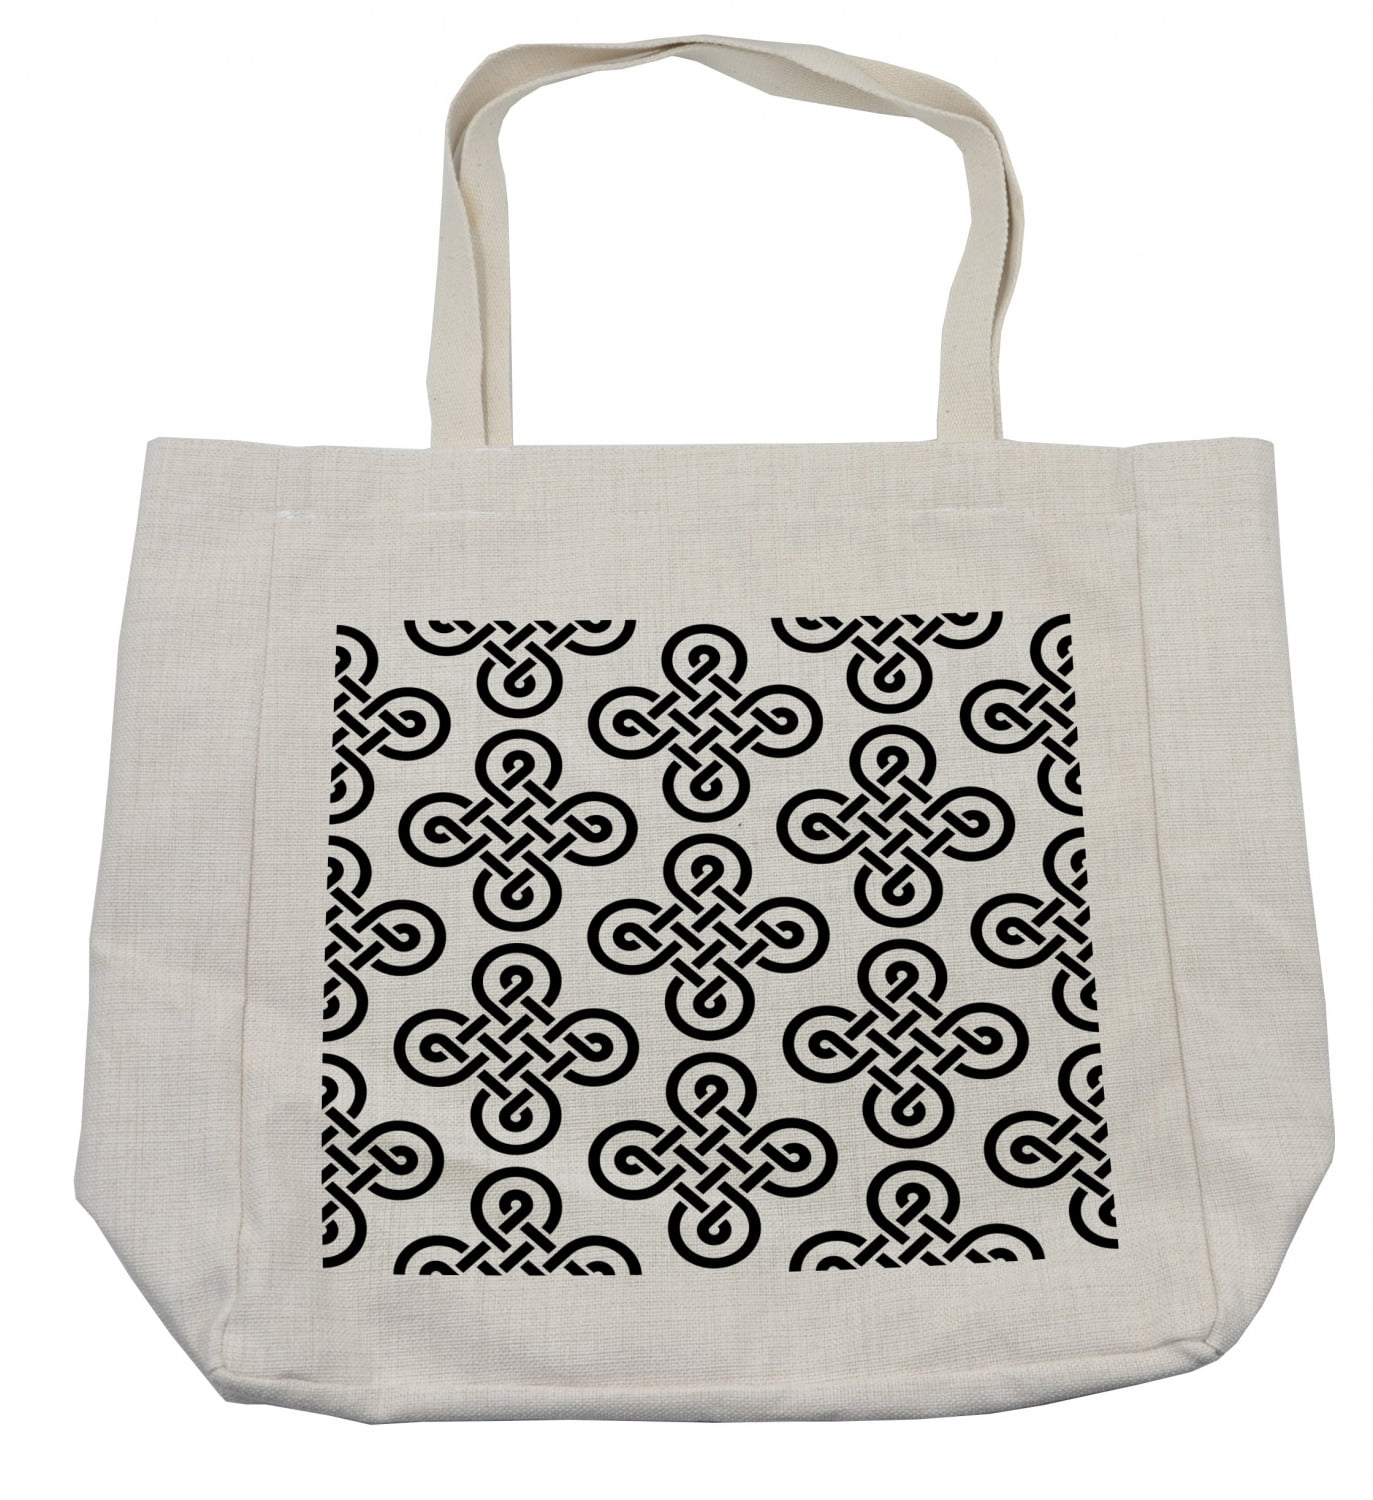 Fantastic Gift Idea-reusable tote bag-fabric tote bag. - 100% Cotton Symmetry TOTE BAG - Bird Design